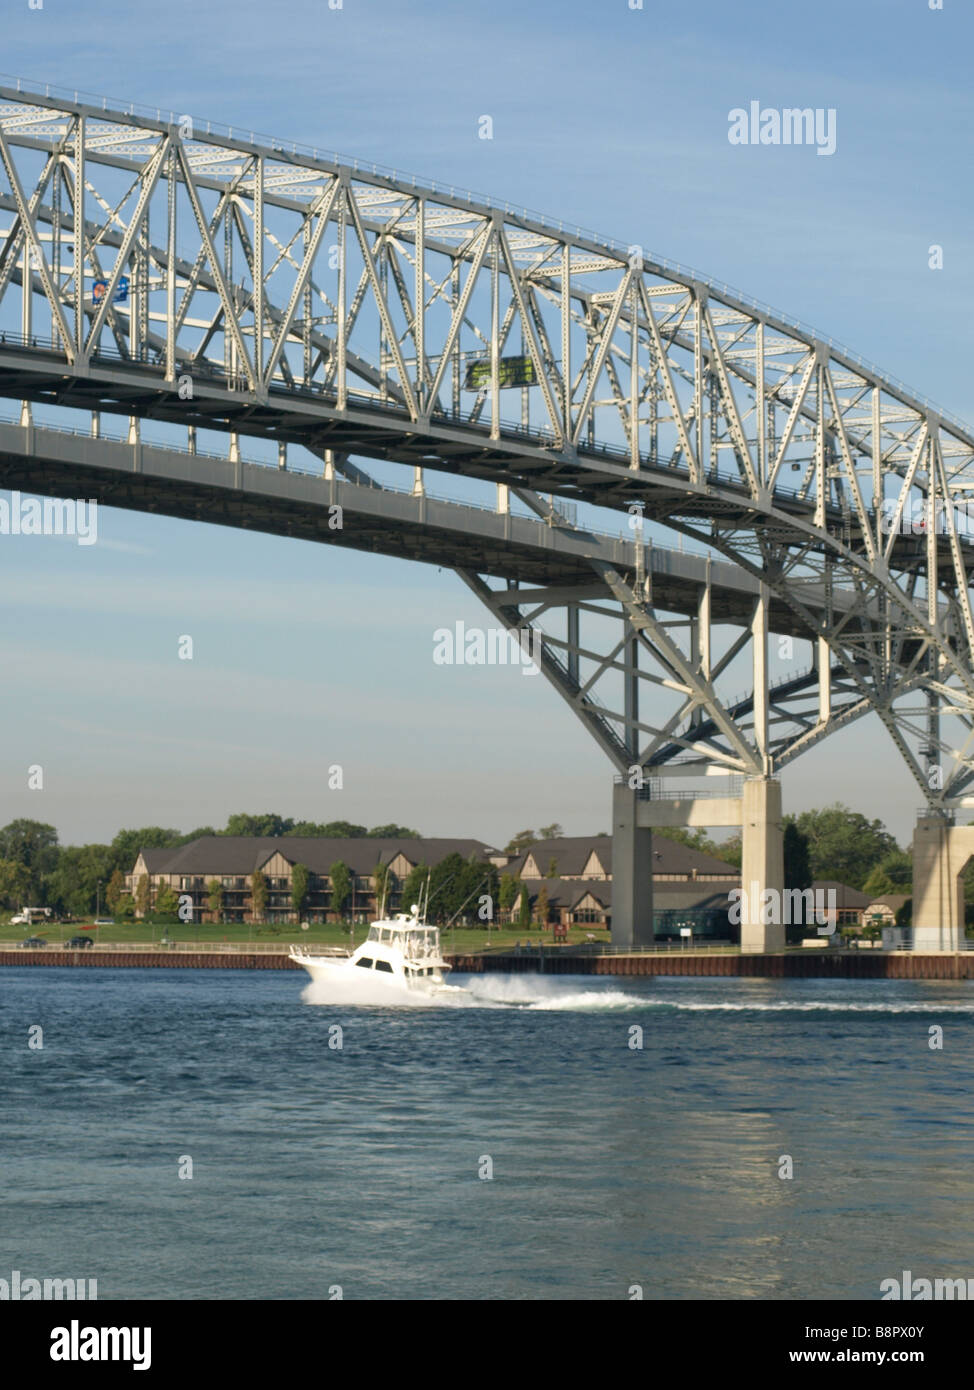 Blue Water Bridge from Sarnia Ontario Canada to Port Huron Michigan USA. The bridge spans the Saint Clair River. Stock Photo